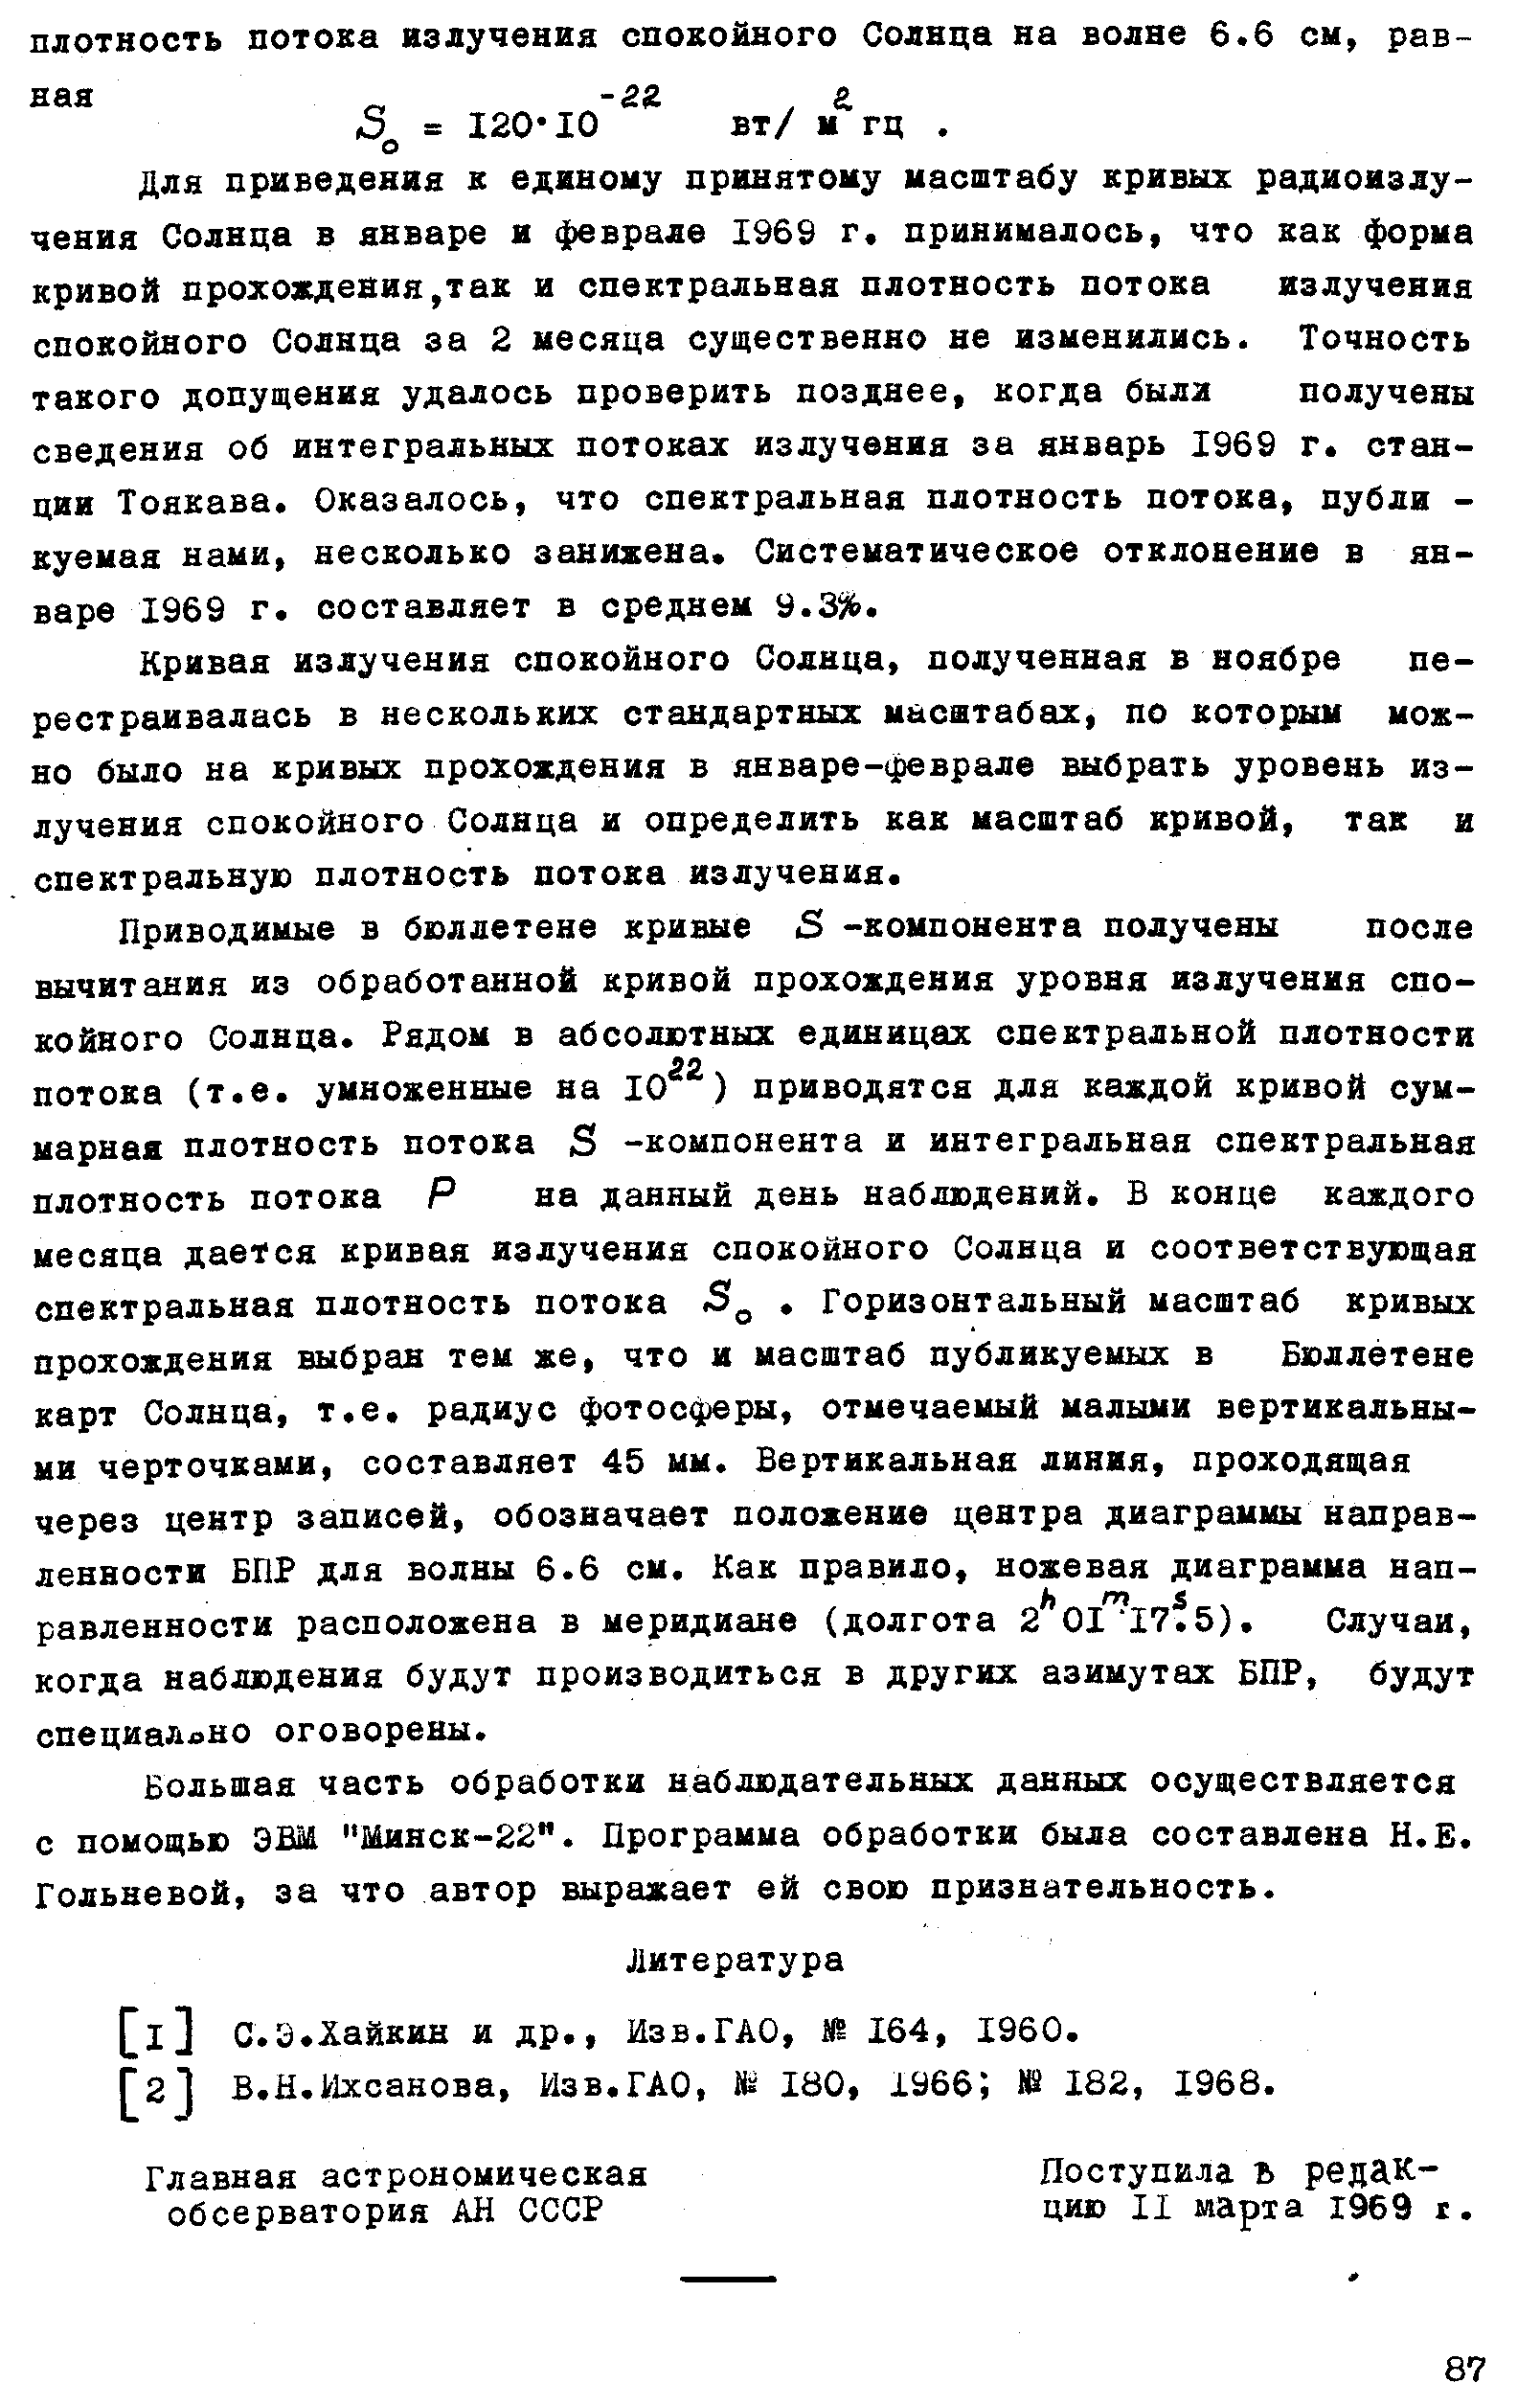 Ихсанова В.Н.,стр.3